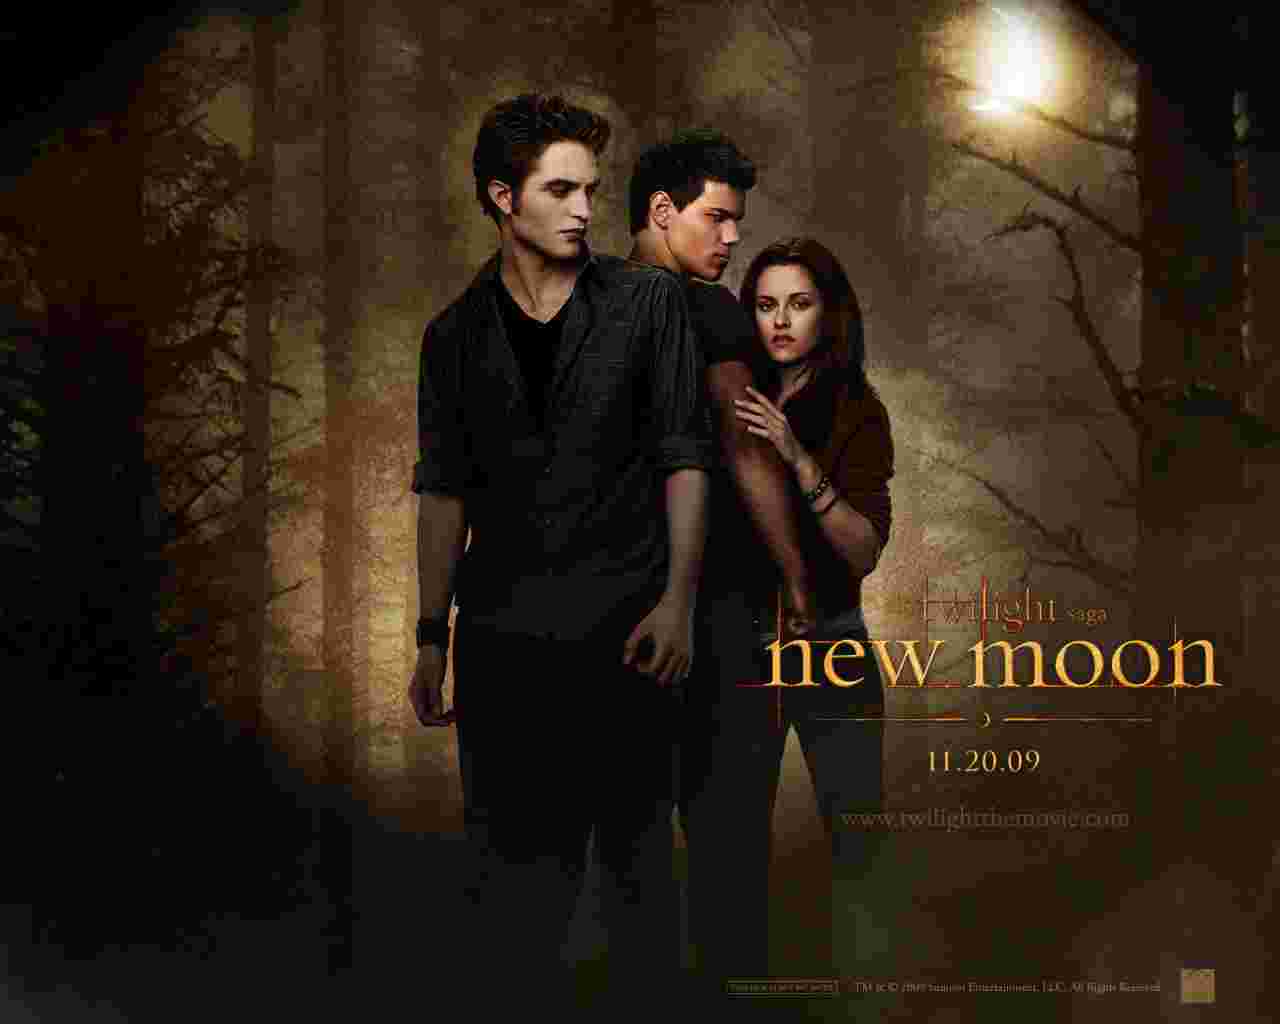 75+] Twilight Saga New Moon Wallpaper - WallpaperSafari